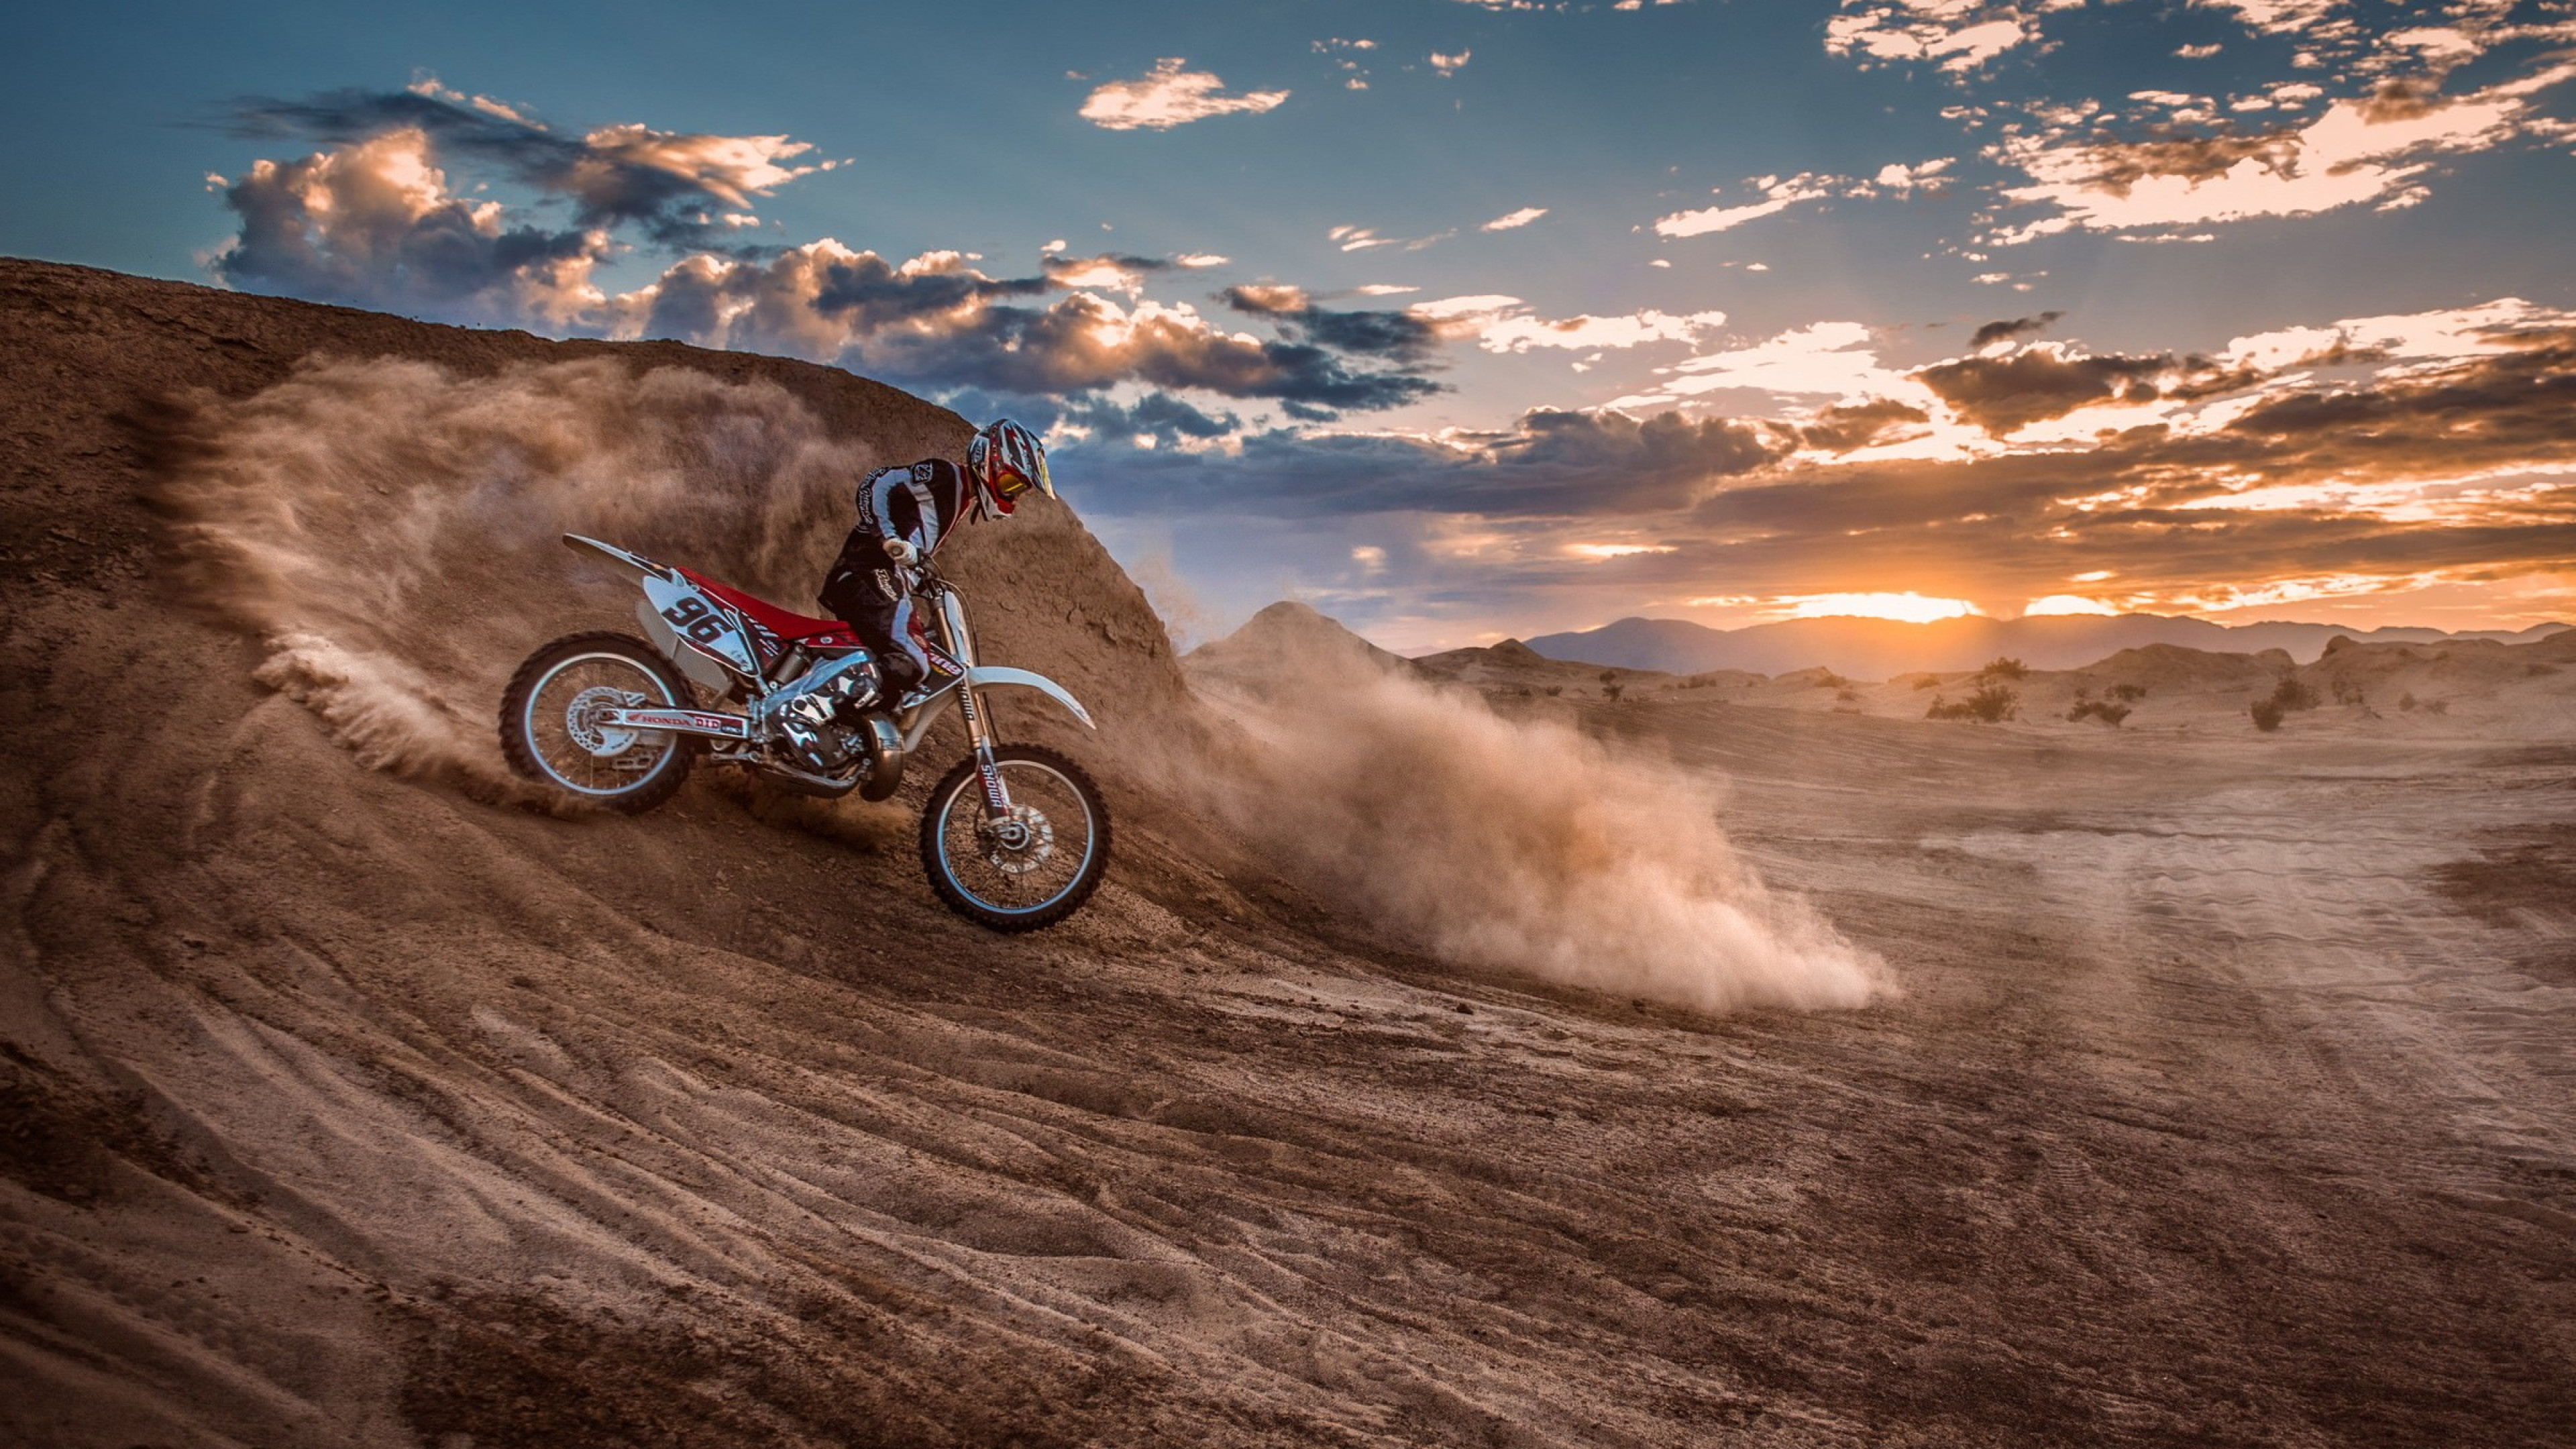 Man Riding Motocross Dirt Bike on Brown Sand During Daytime. Wallpaper in 3840x2160 Resolution